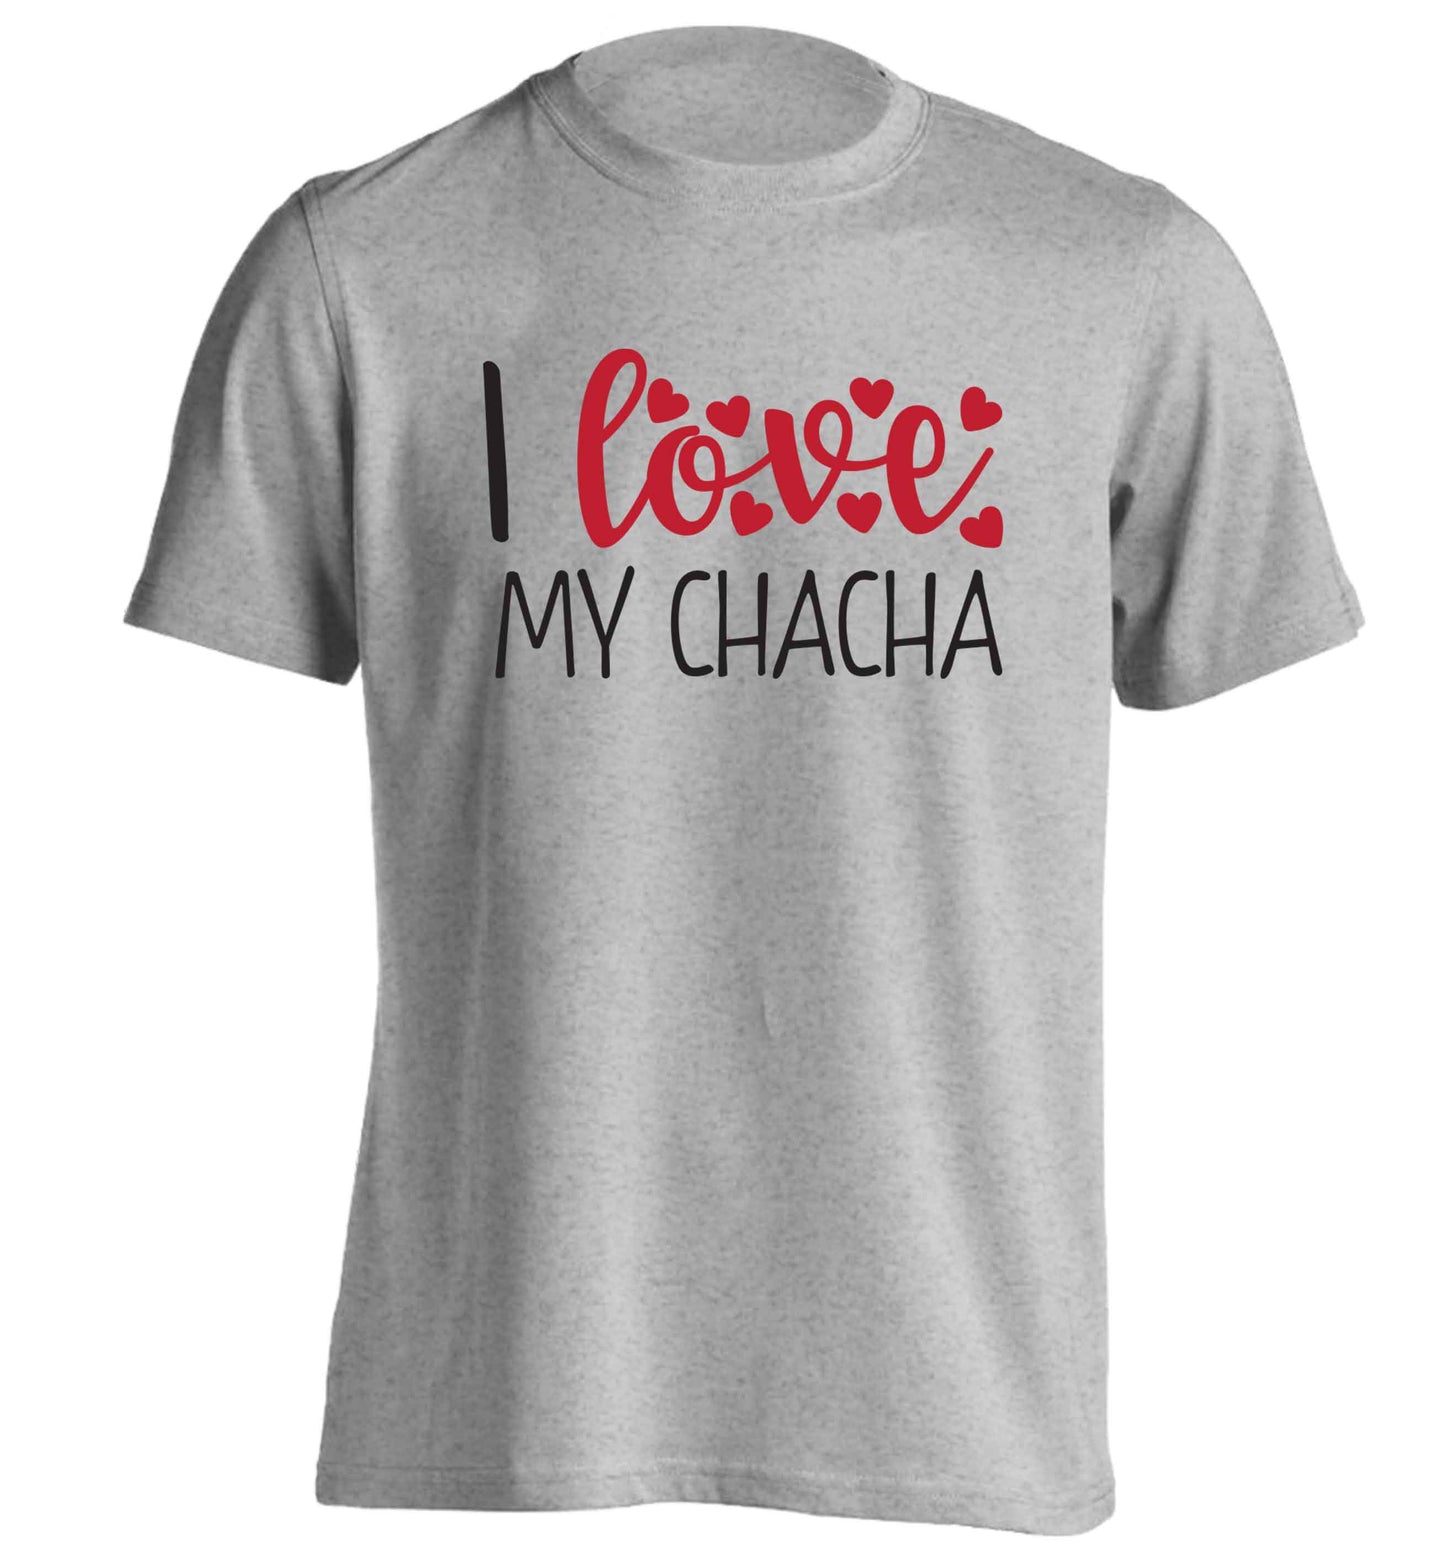 I love my chacha adults unisex grey Tshirt 2XL